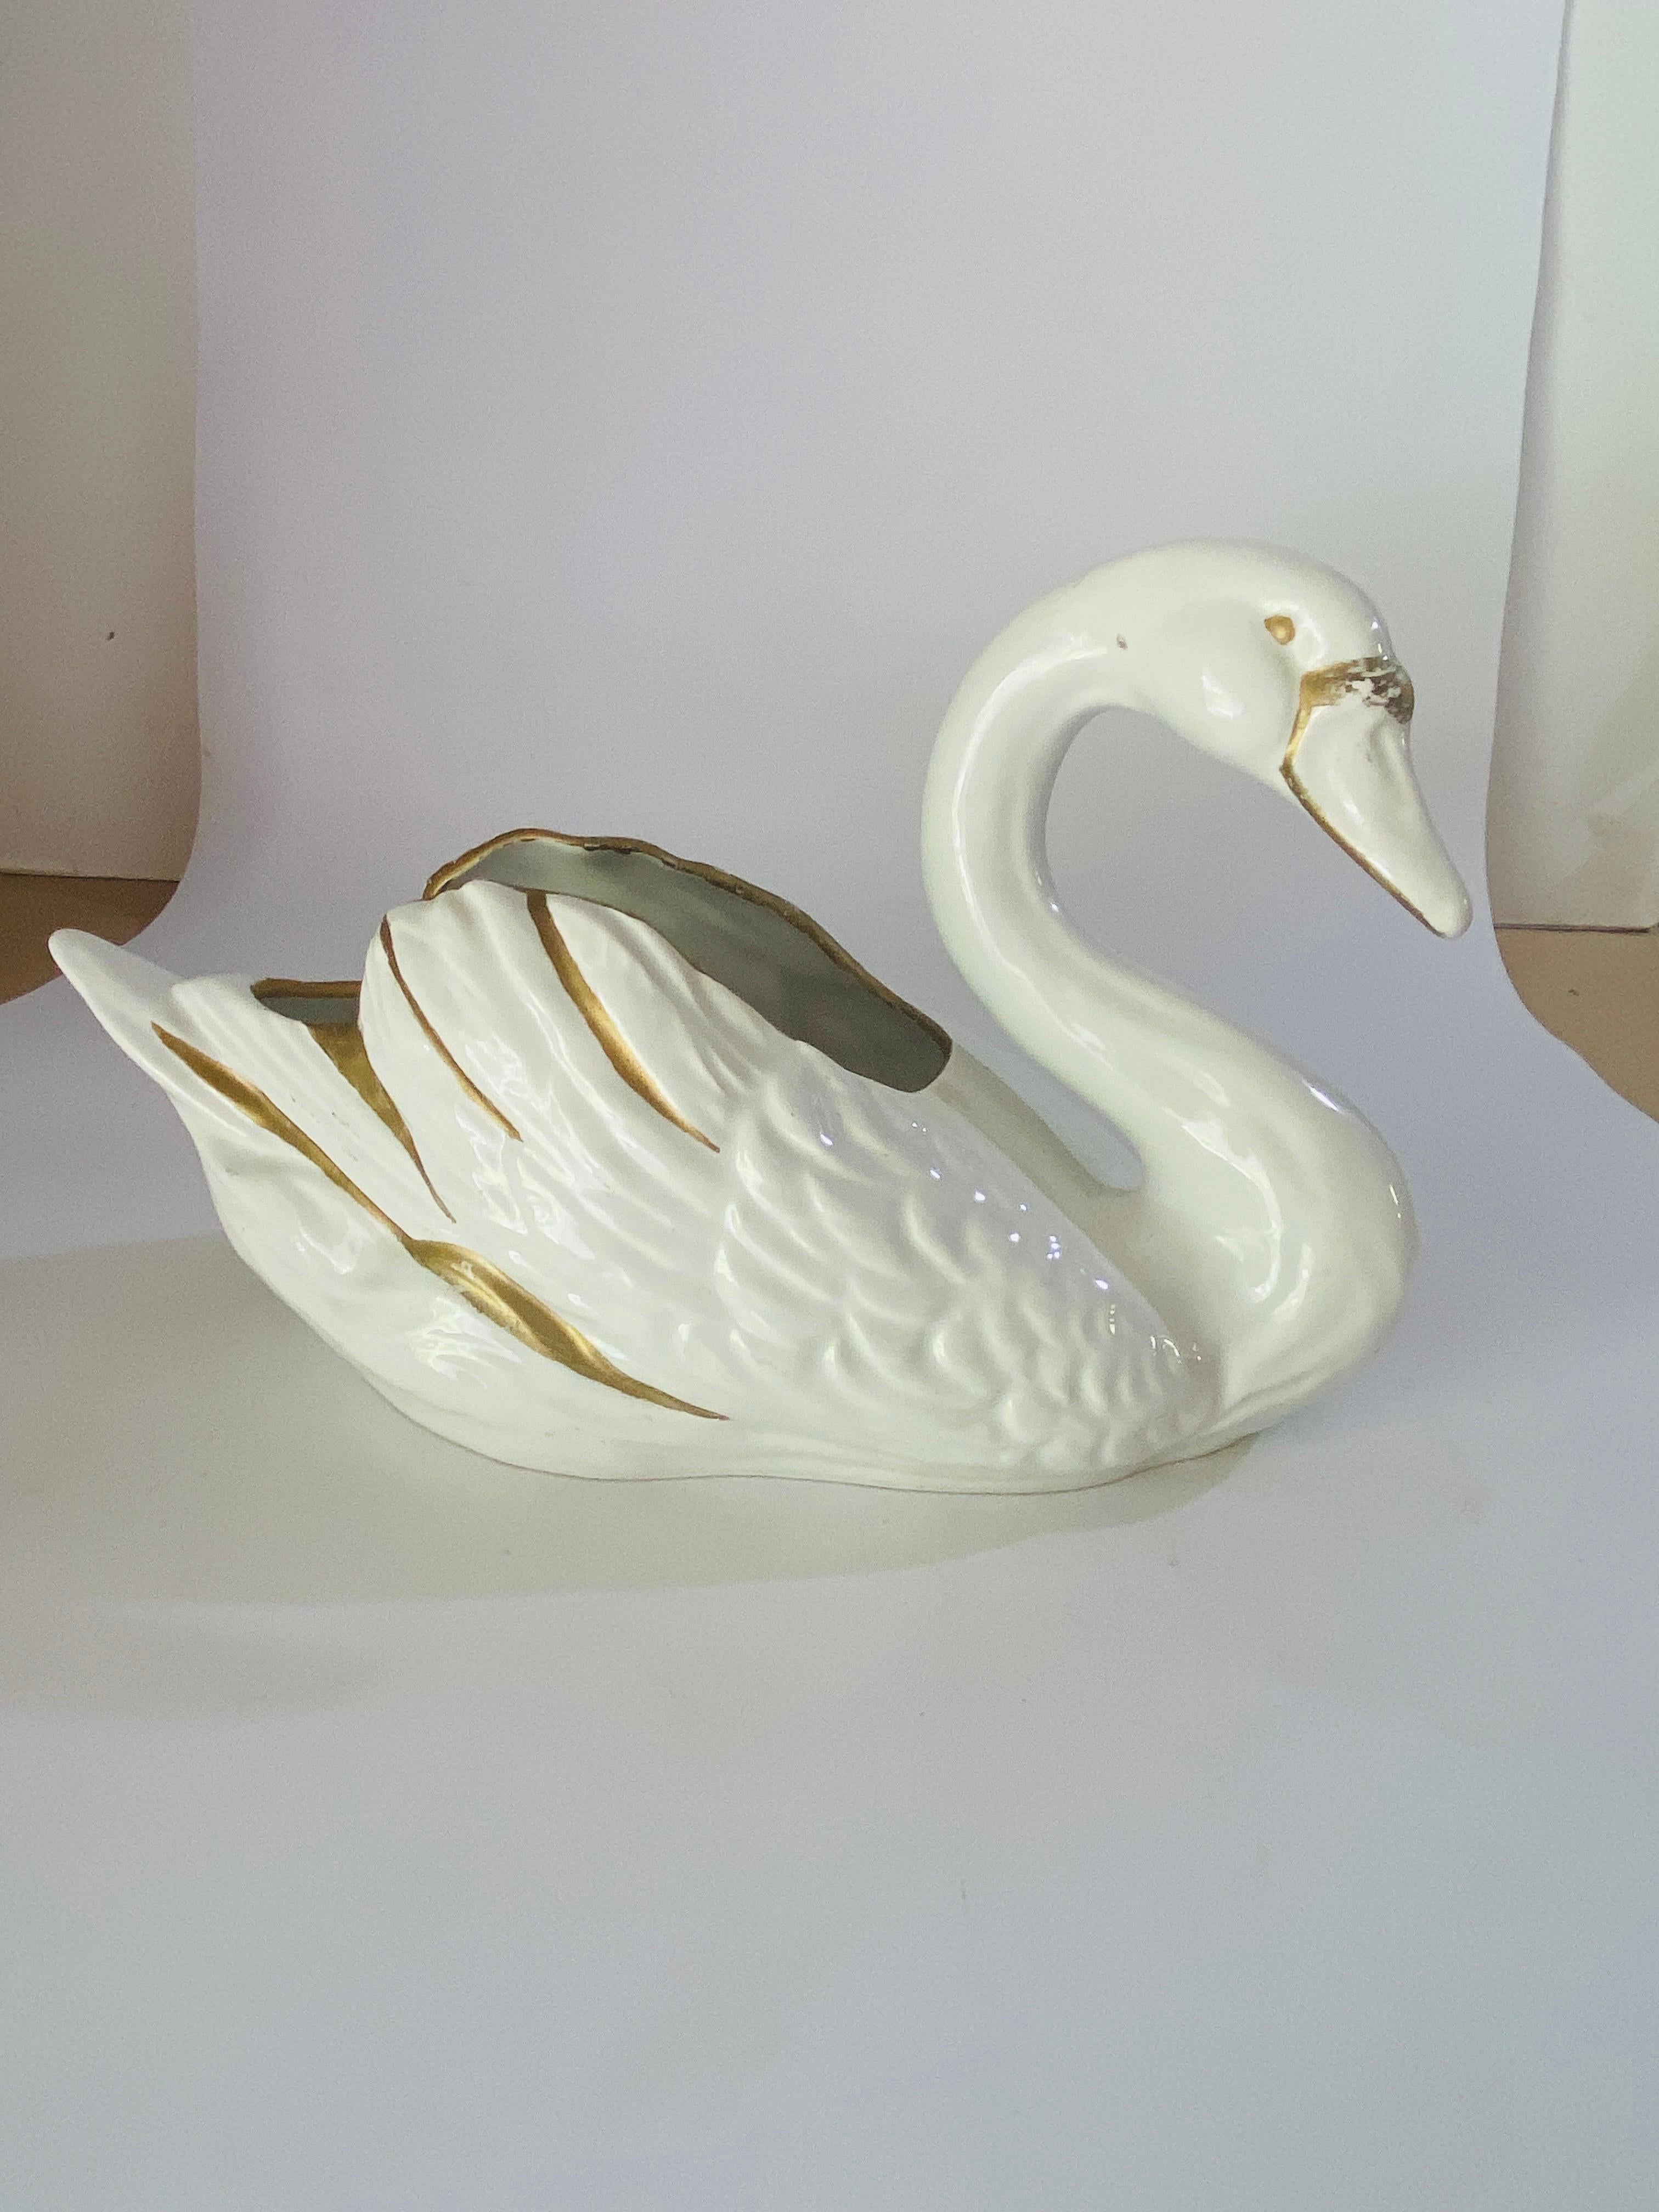 Vide Poche or Decorative Basket, Swan Sculpture Shaped in Porcelain Italy, 1970s For Sale 3